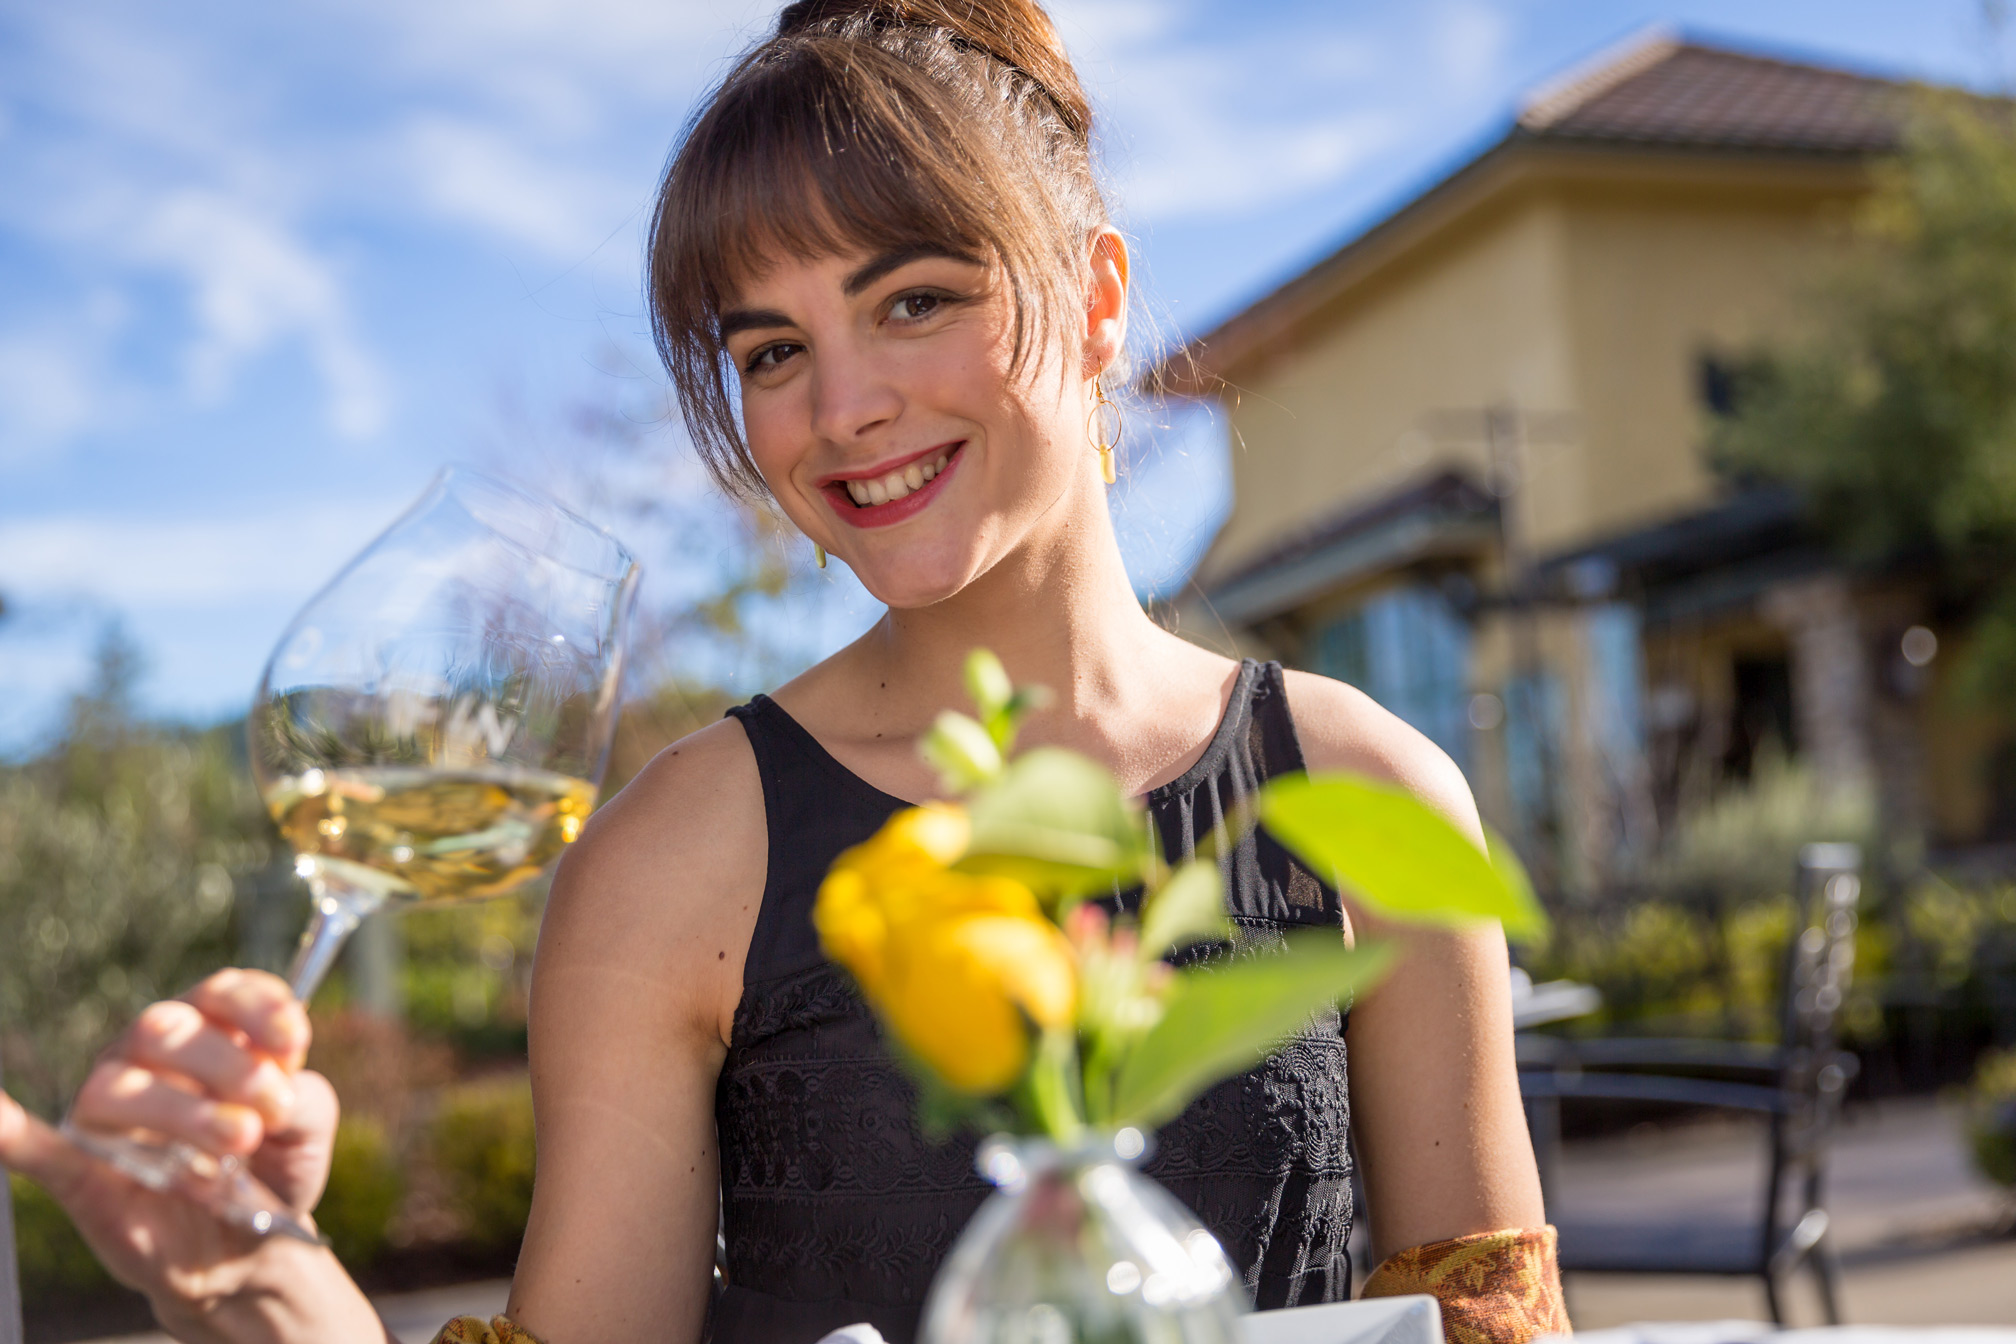 Discover a variety of chardonnays at Oregon Chardonnay